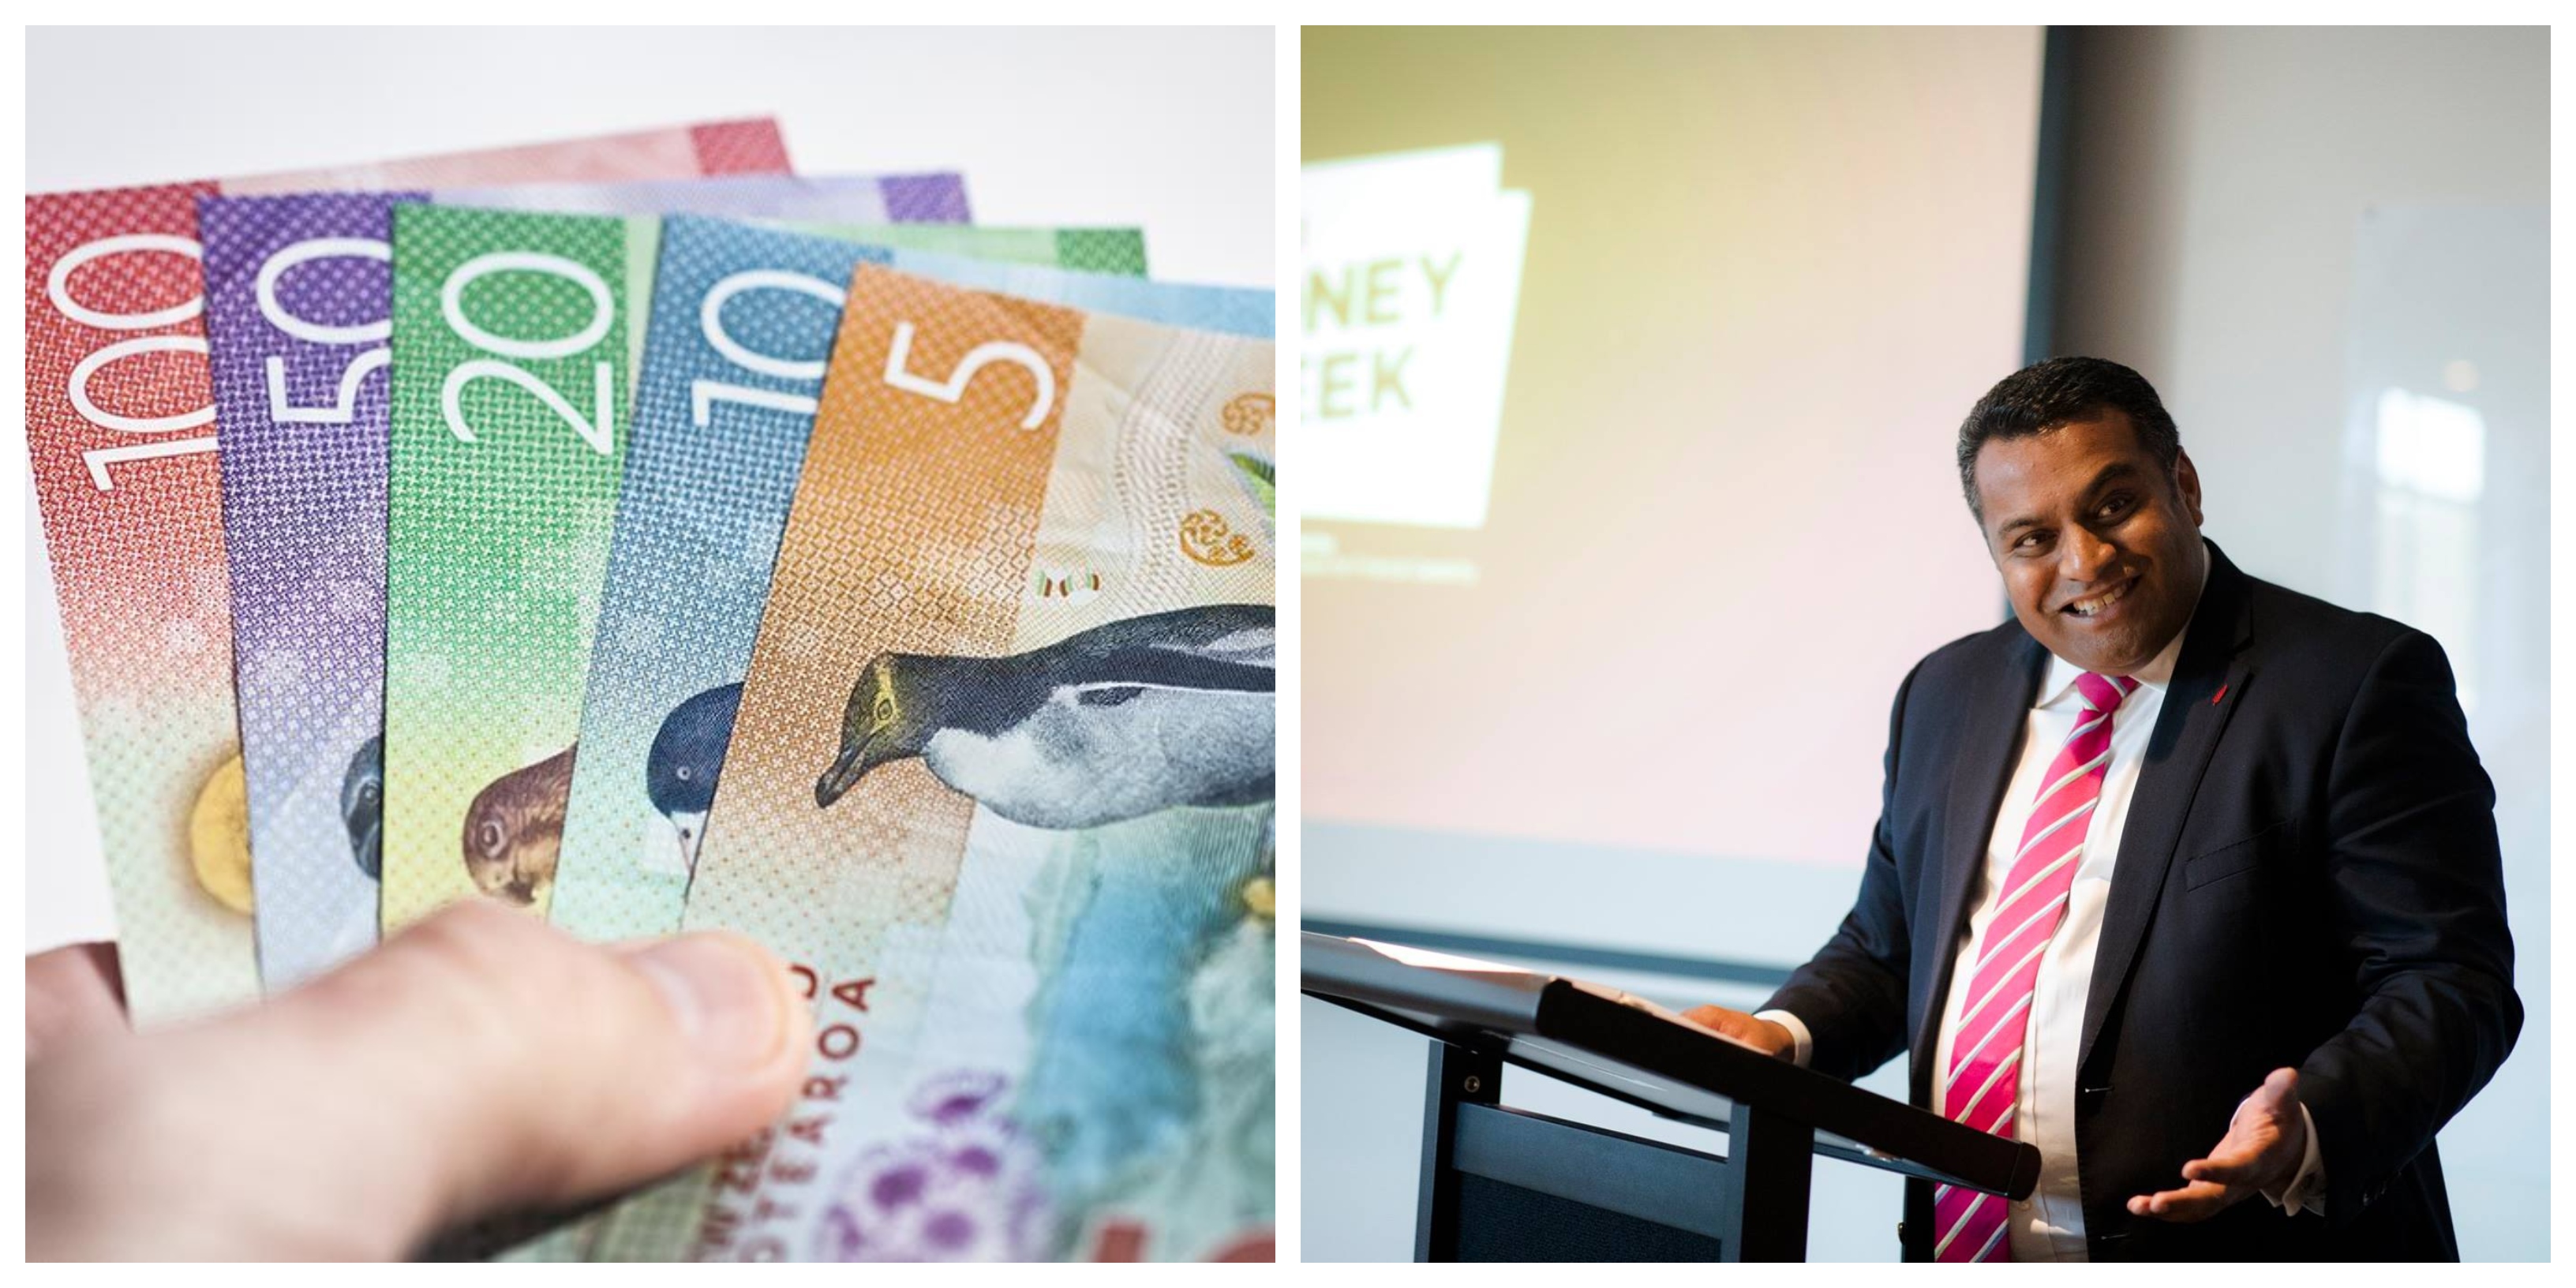 Minister for Consumer Affairs Kris Faafoi predatory lending New Zealand